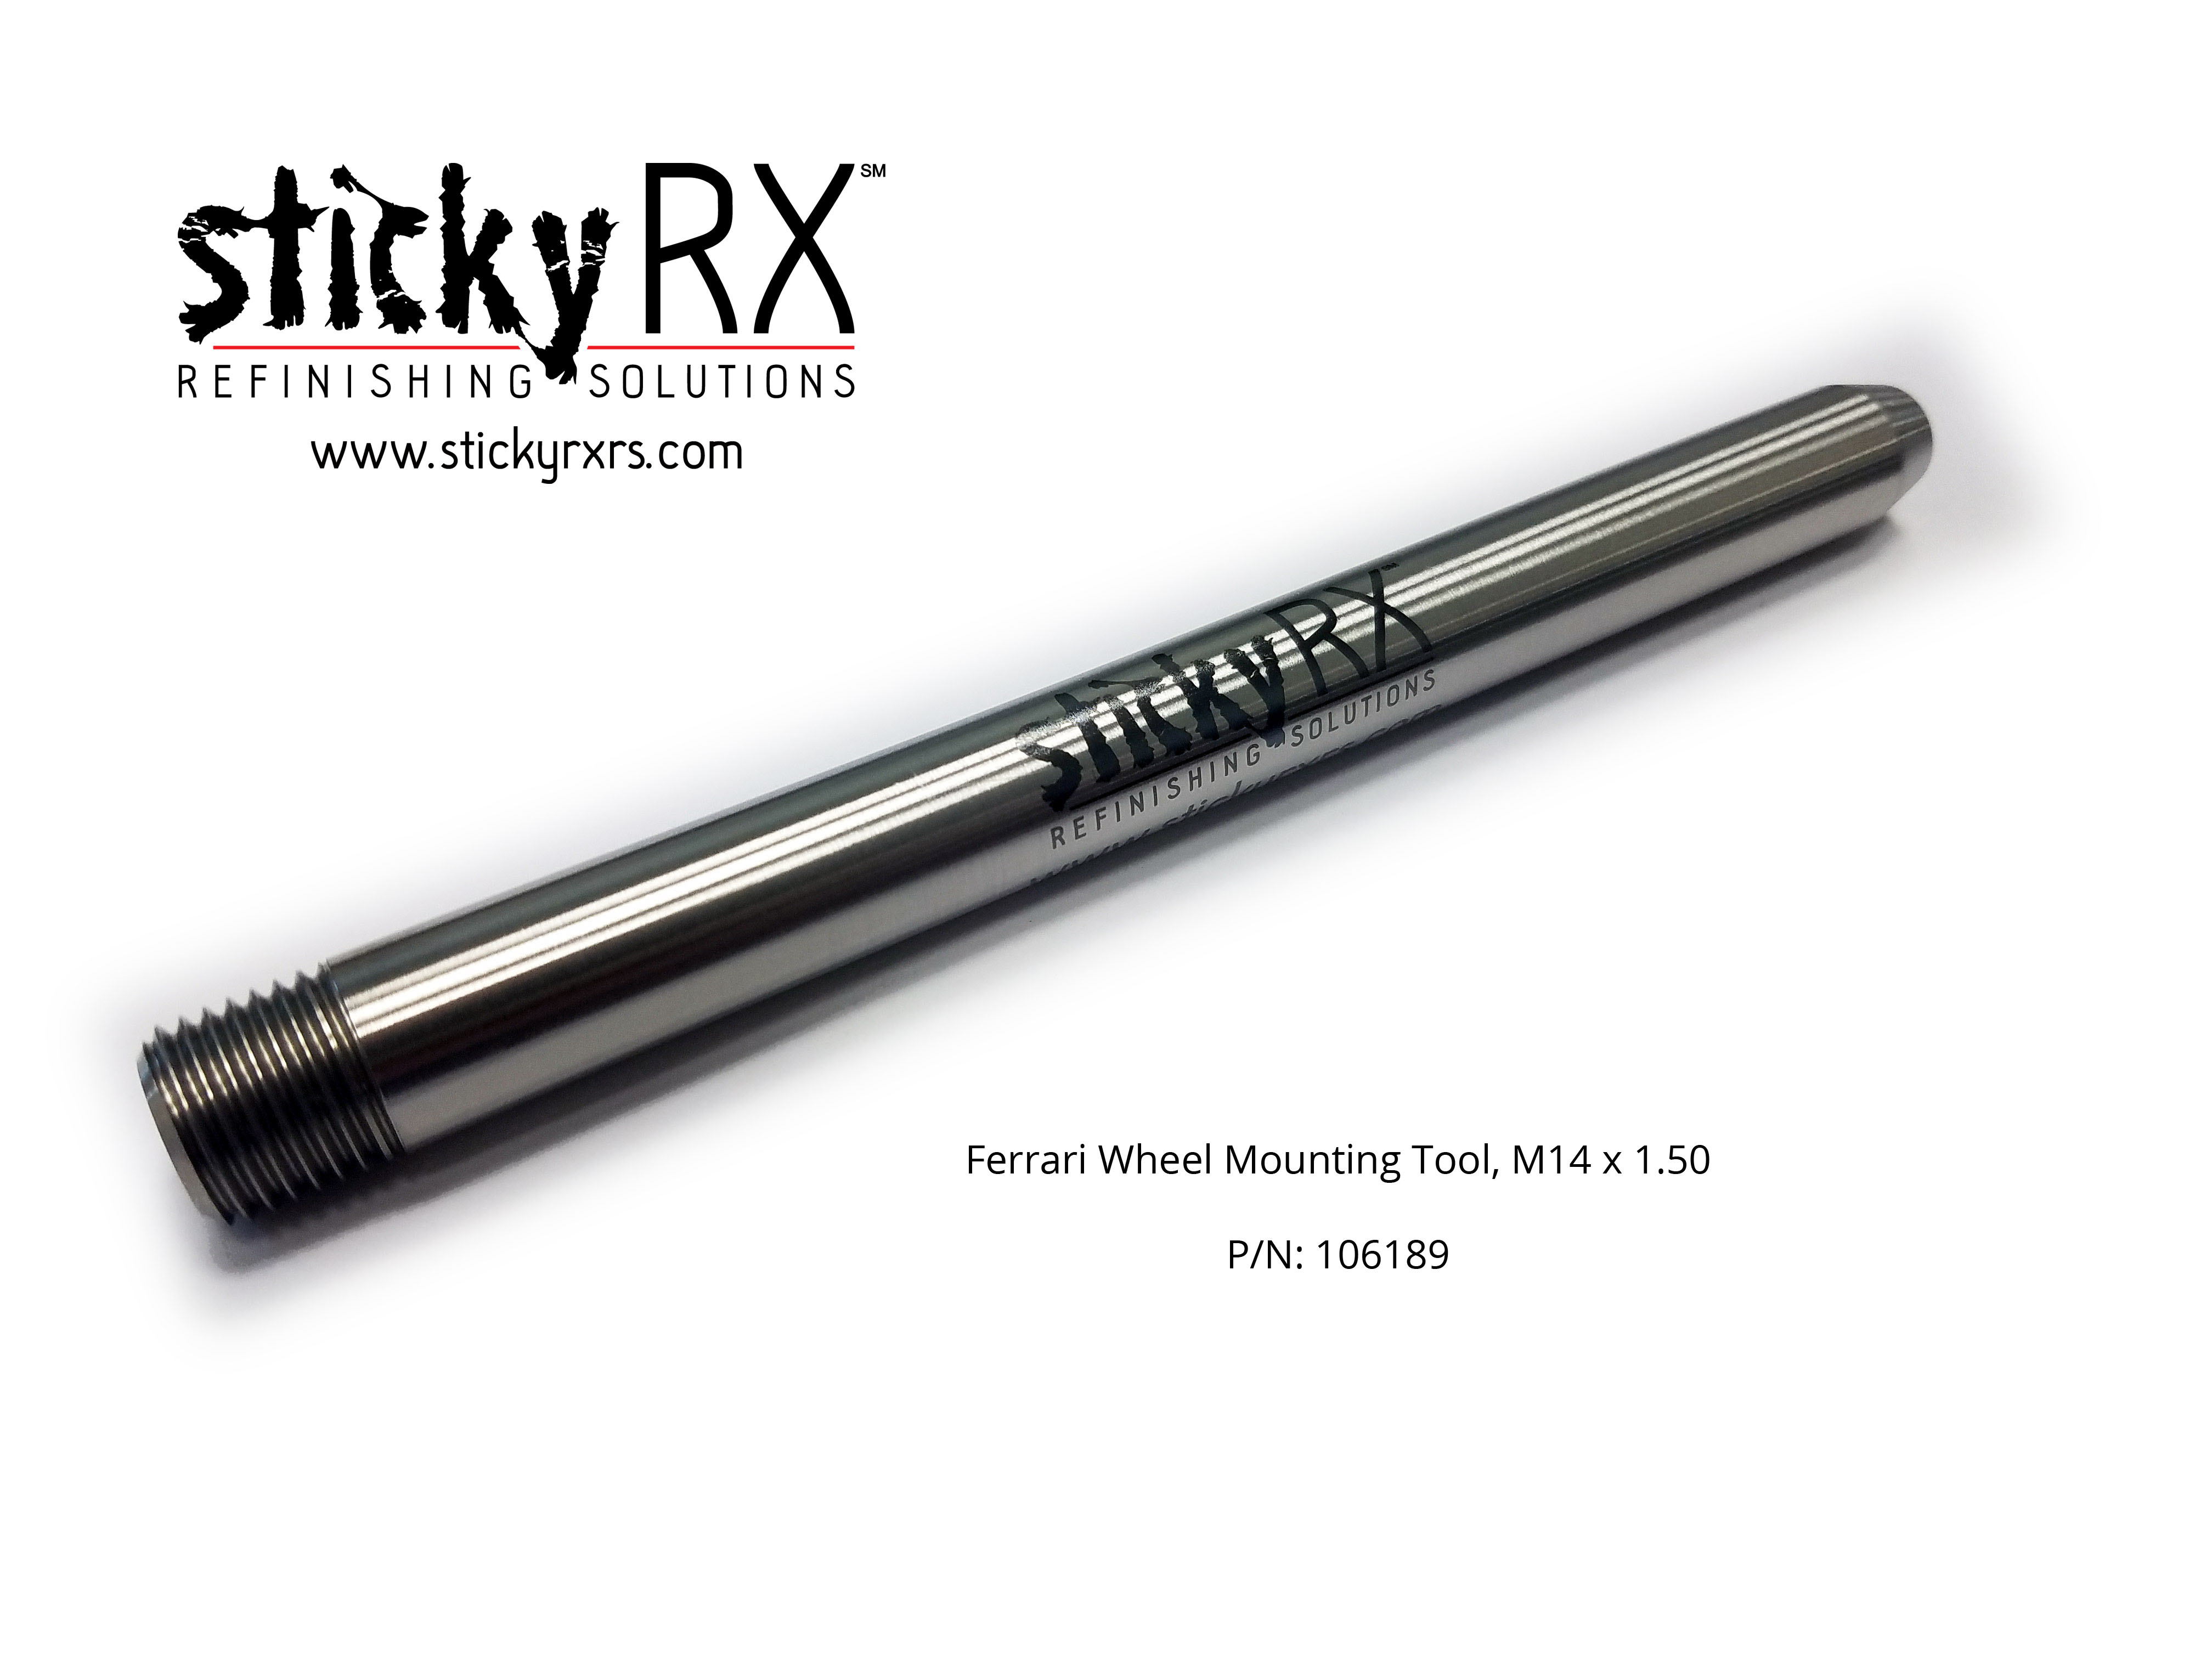 Sticky RX Refinishing Solutions Ferrari Wheel Mounting Tool 01